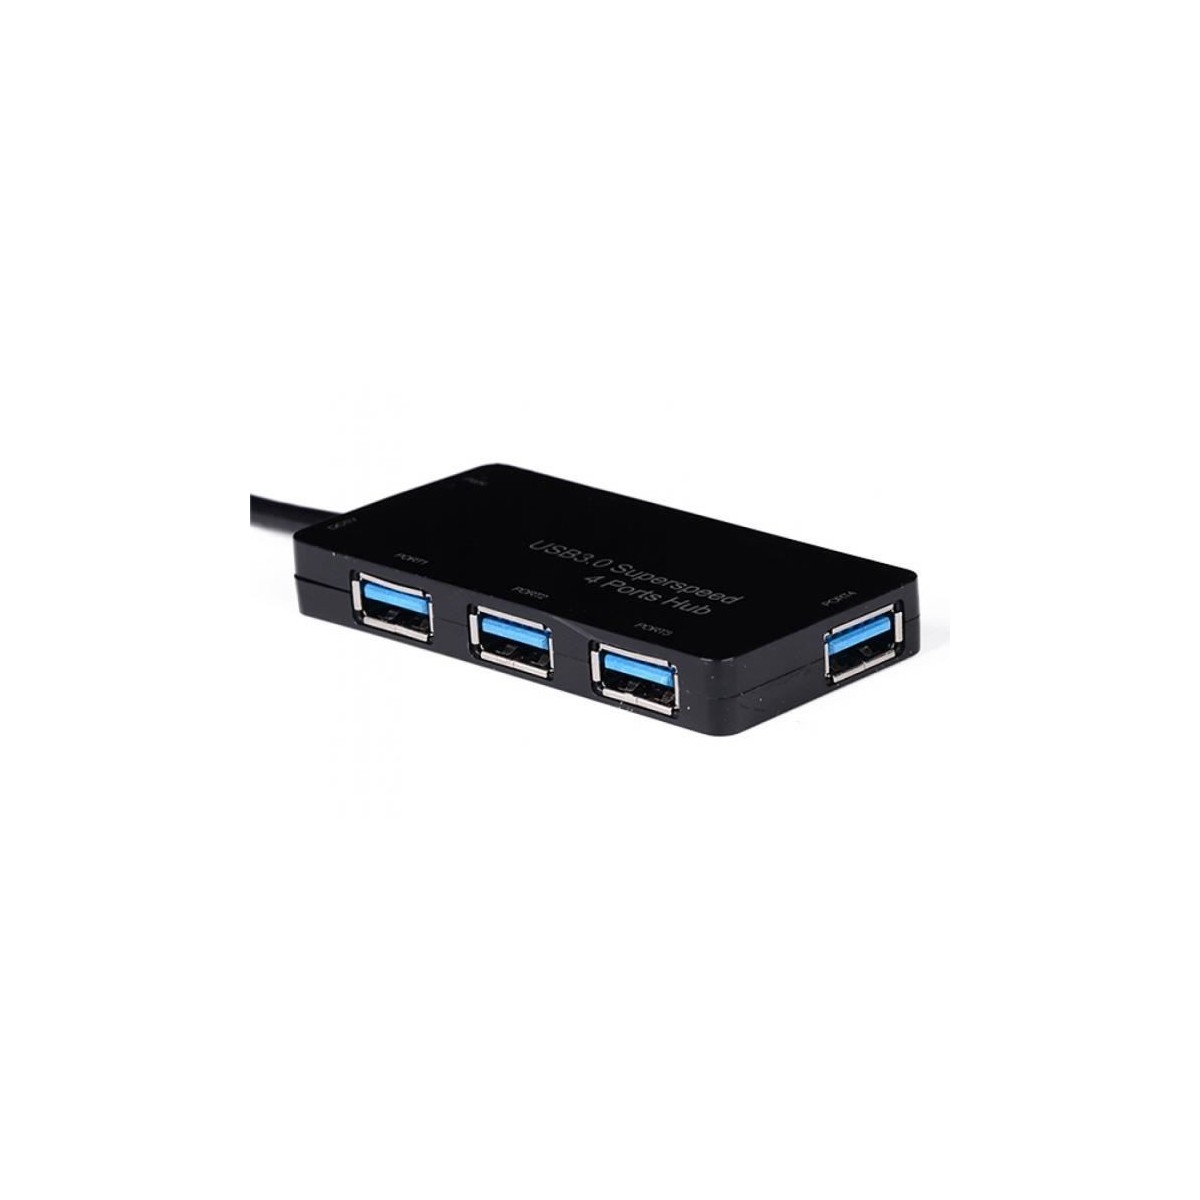 HUB 4 ports USB 3.0 Super haute vitesse adaptateur pour PC portable